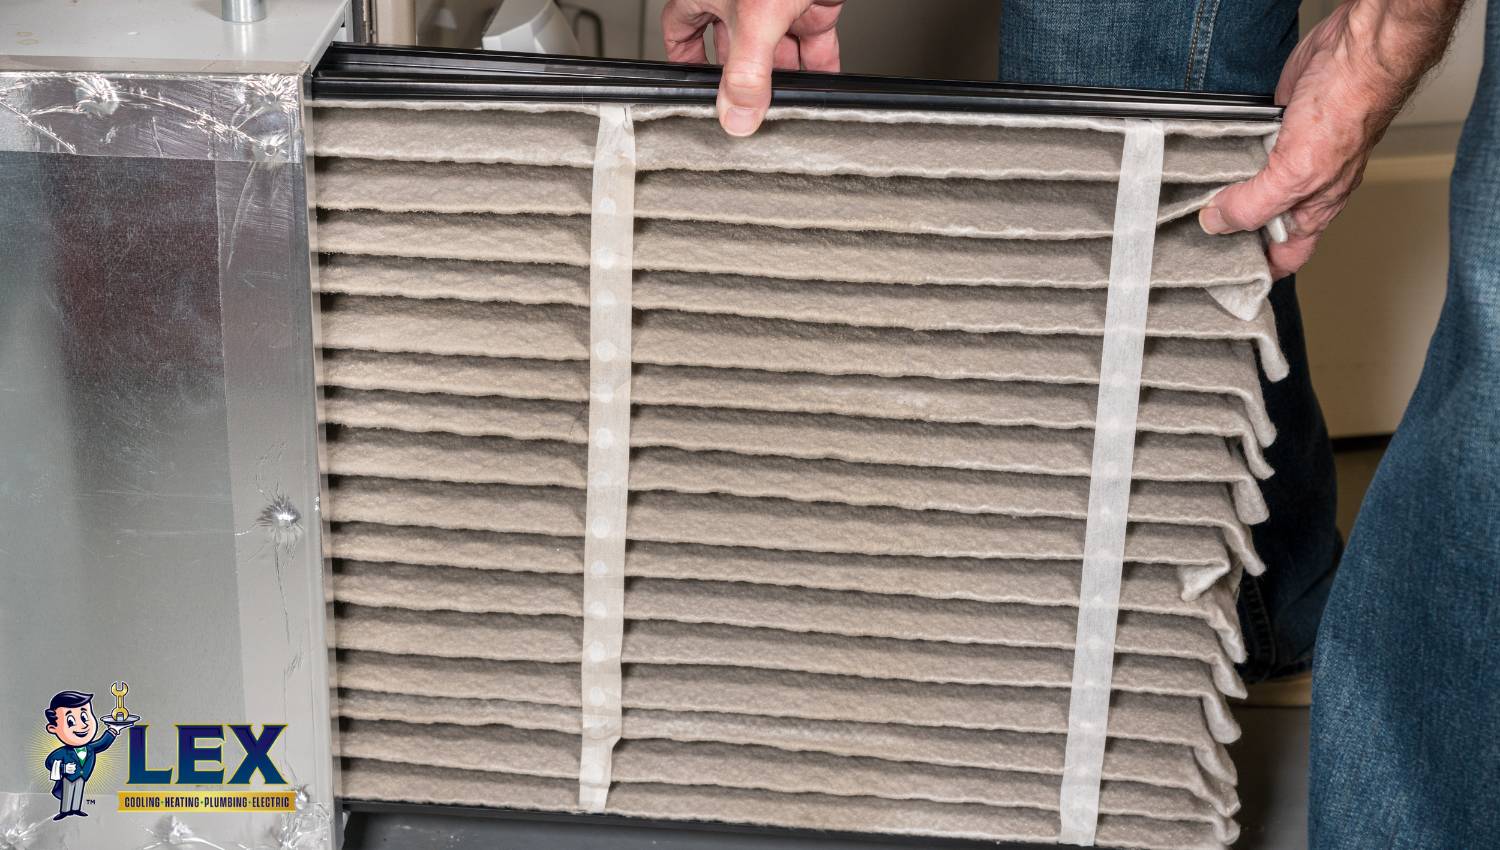 DIY Air Conditioner Maintenance